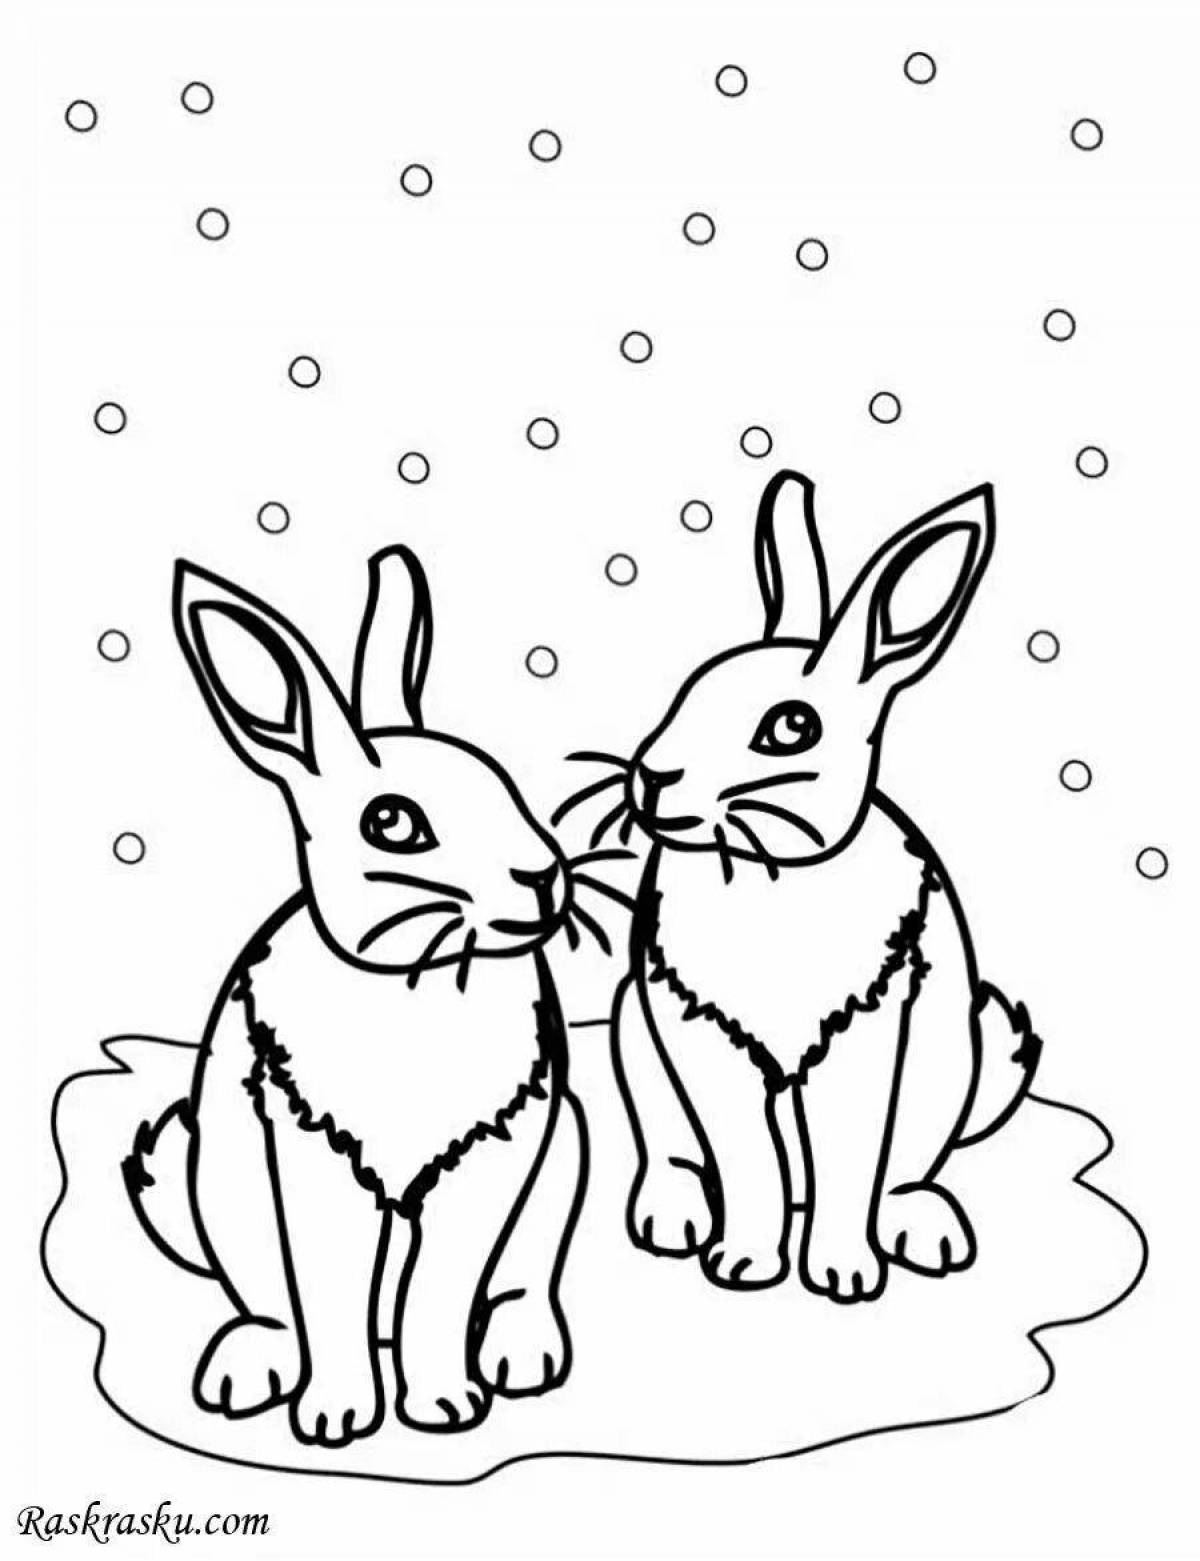 Фото Радостная раскраска для детей заяц зимой